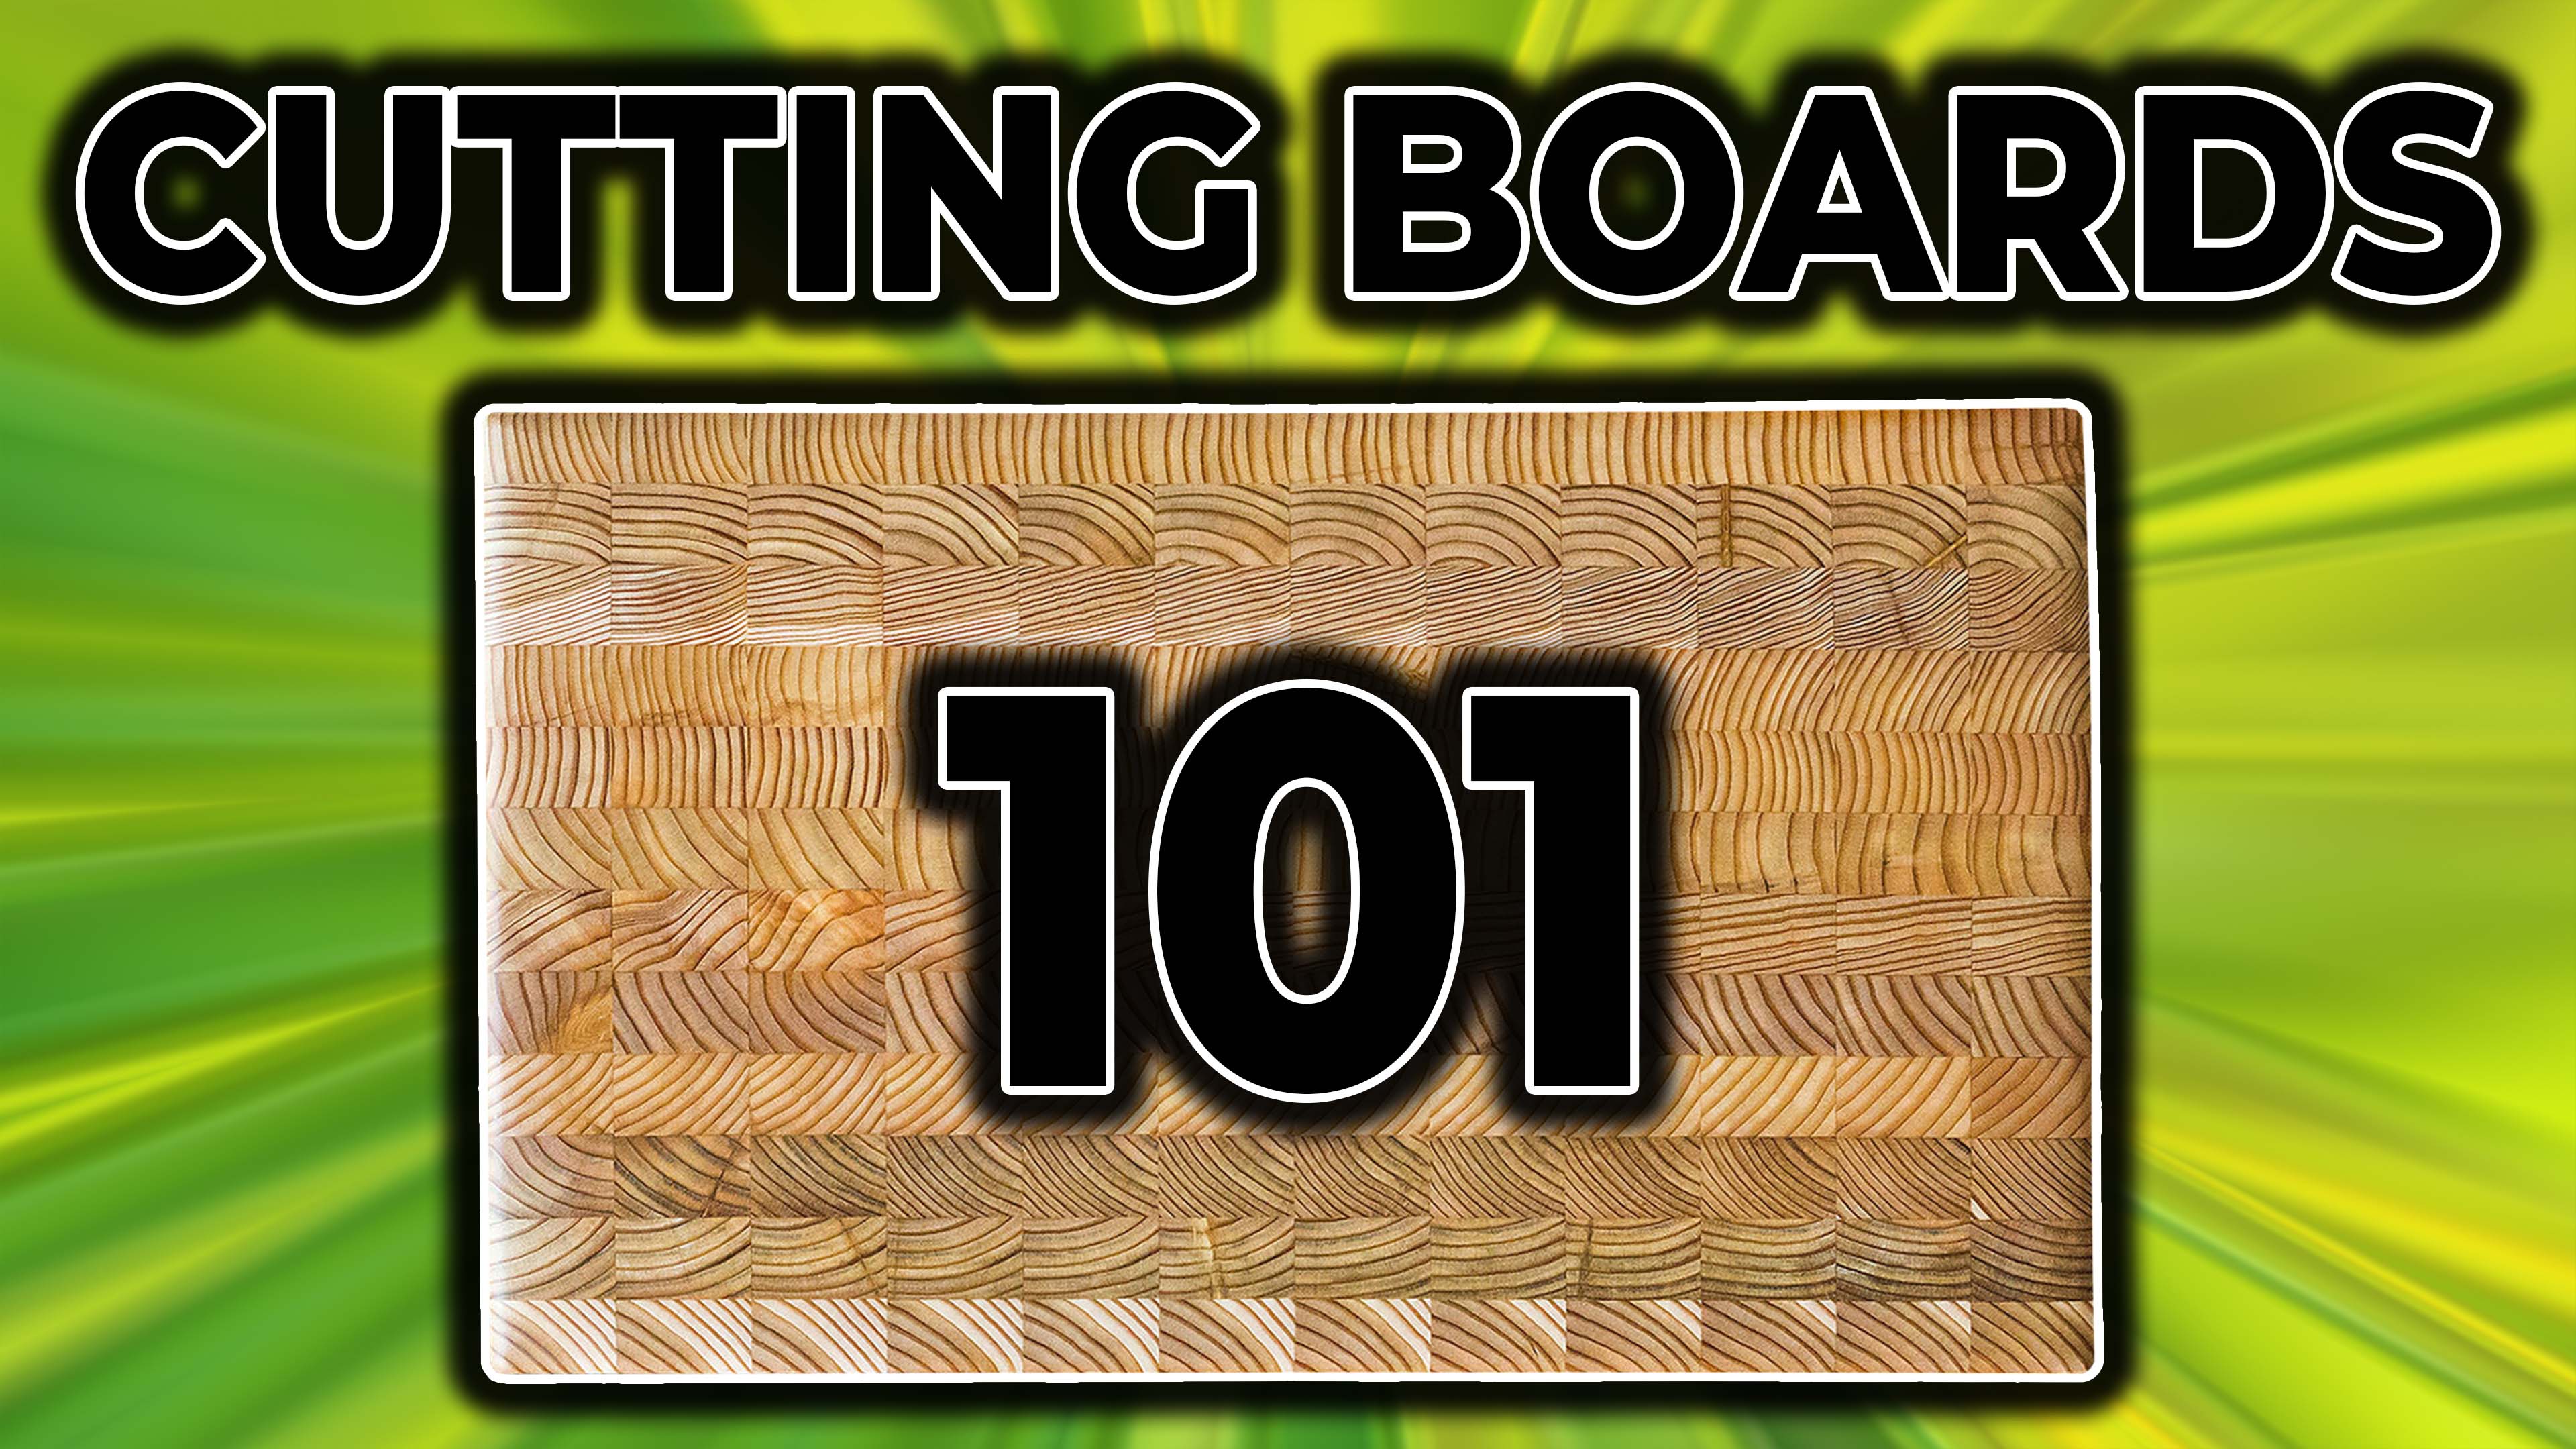 Cutting Boards 101